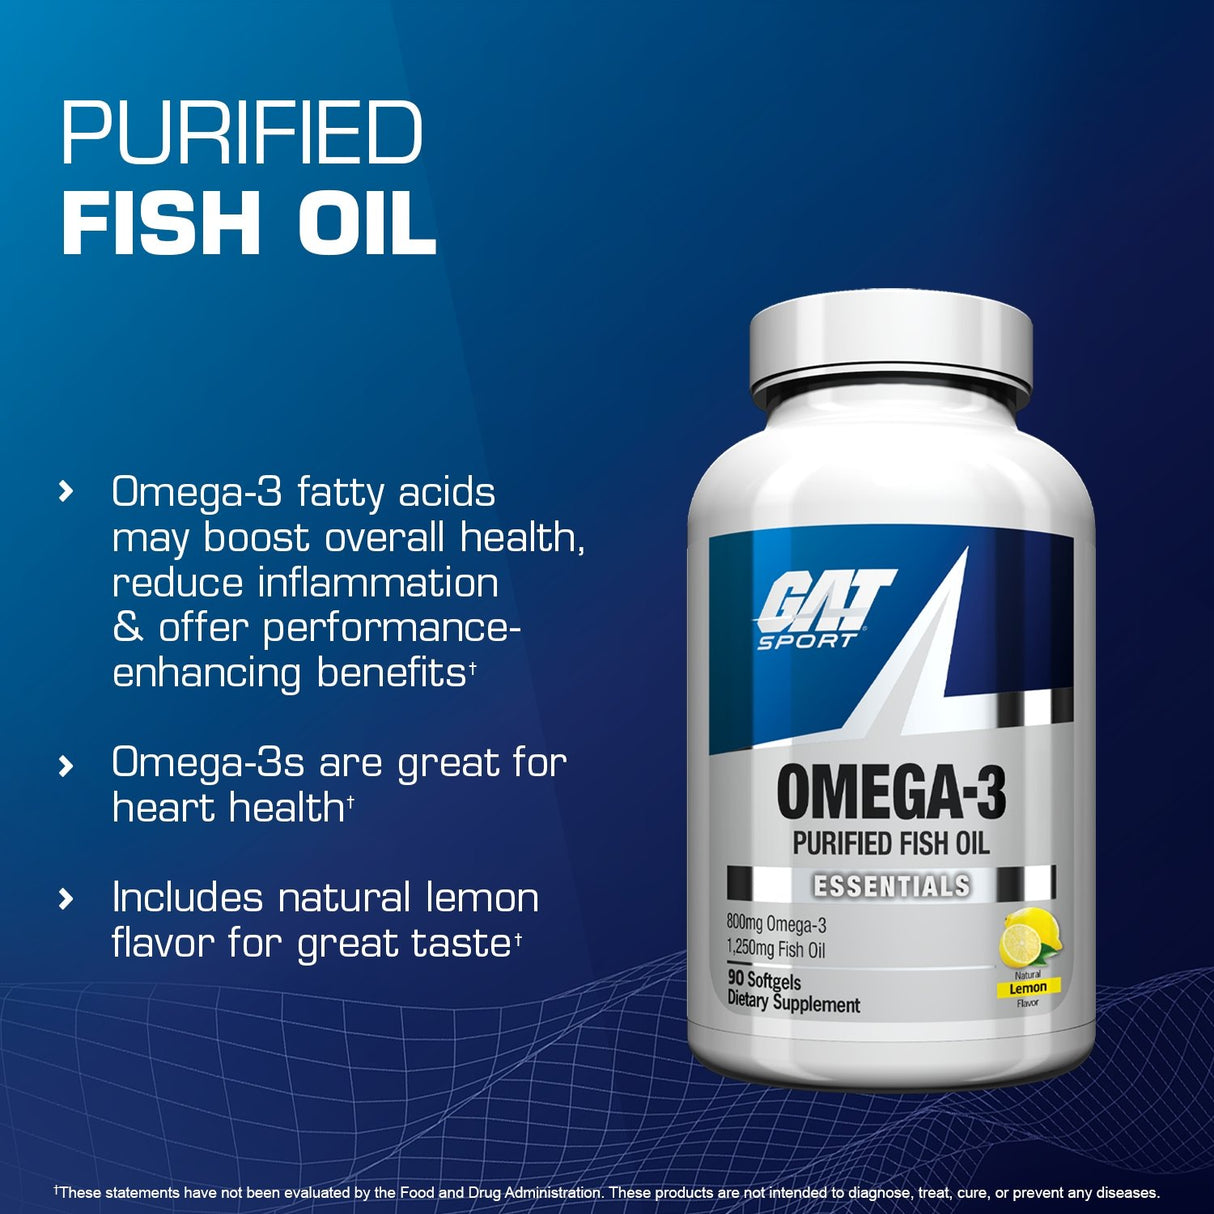 GAT SPORT OMEGA-3 - purified fish oil